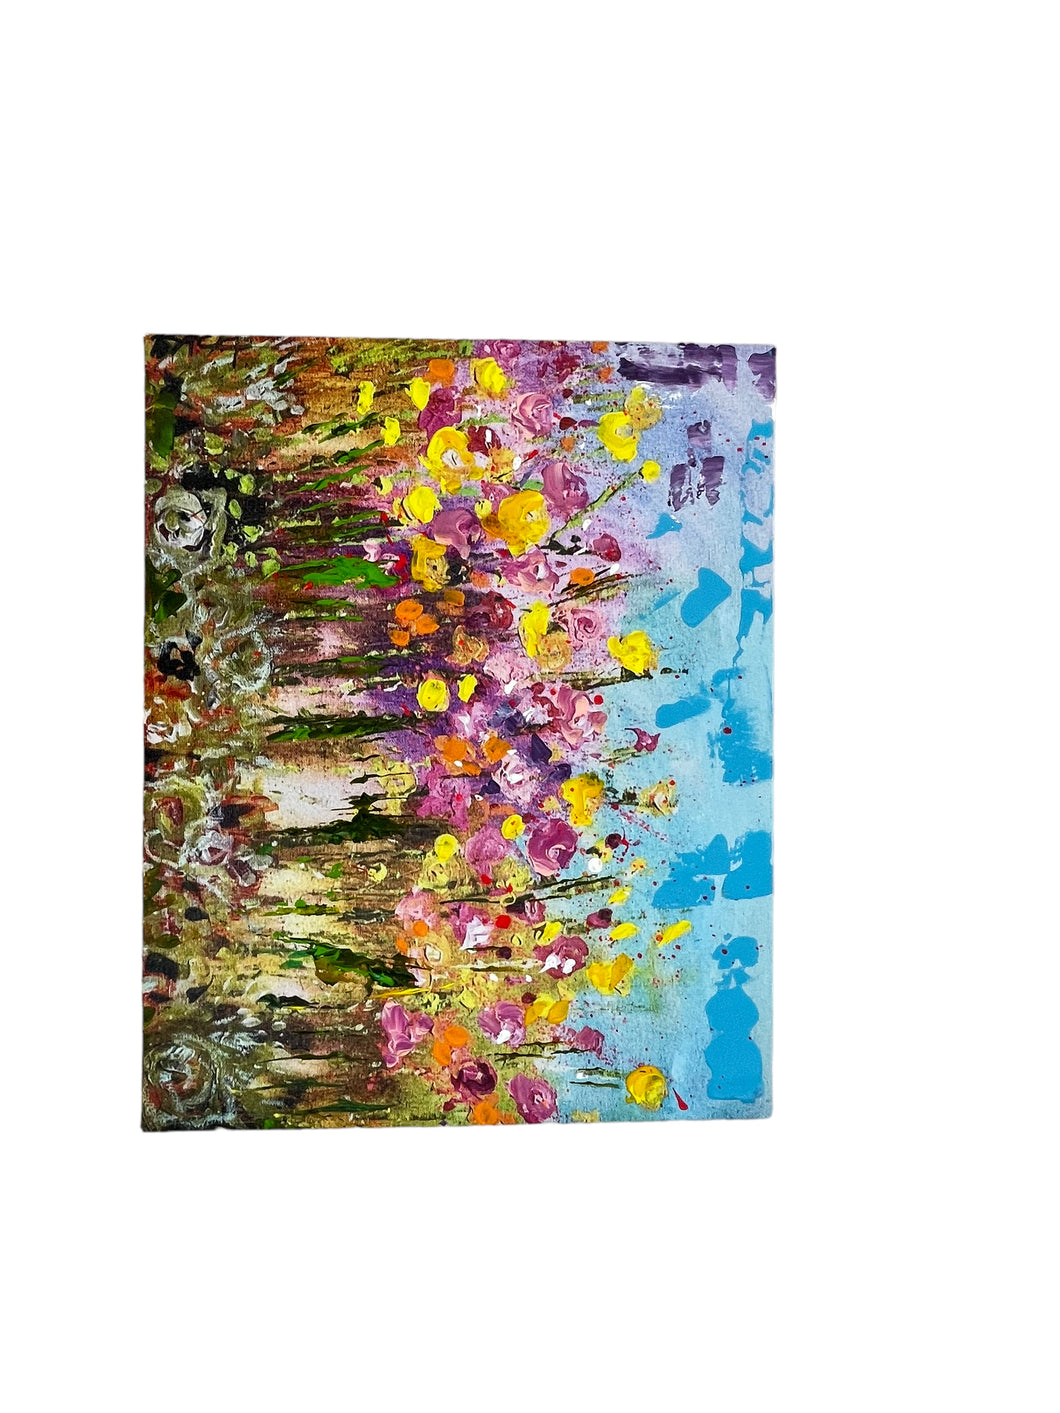 16x20  Spring Garden- stretched canvas print